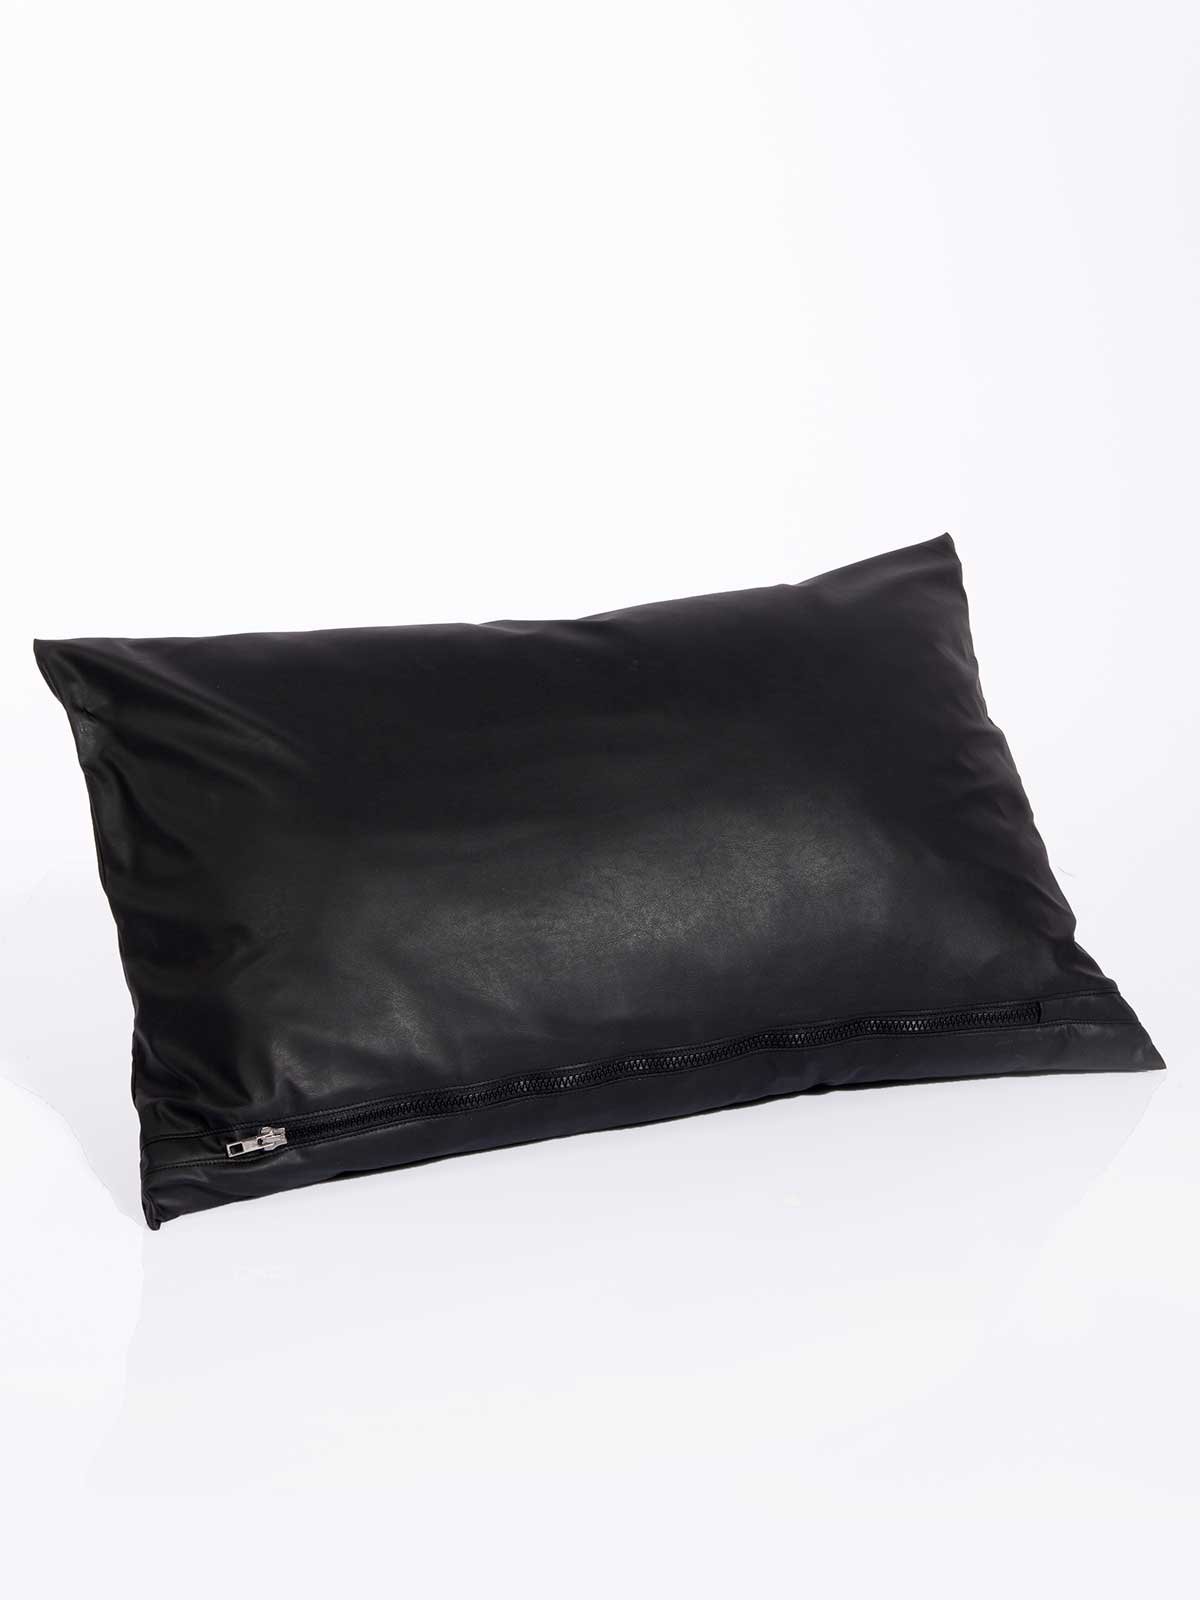 Pillow | Black